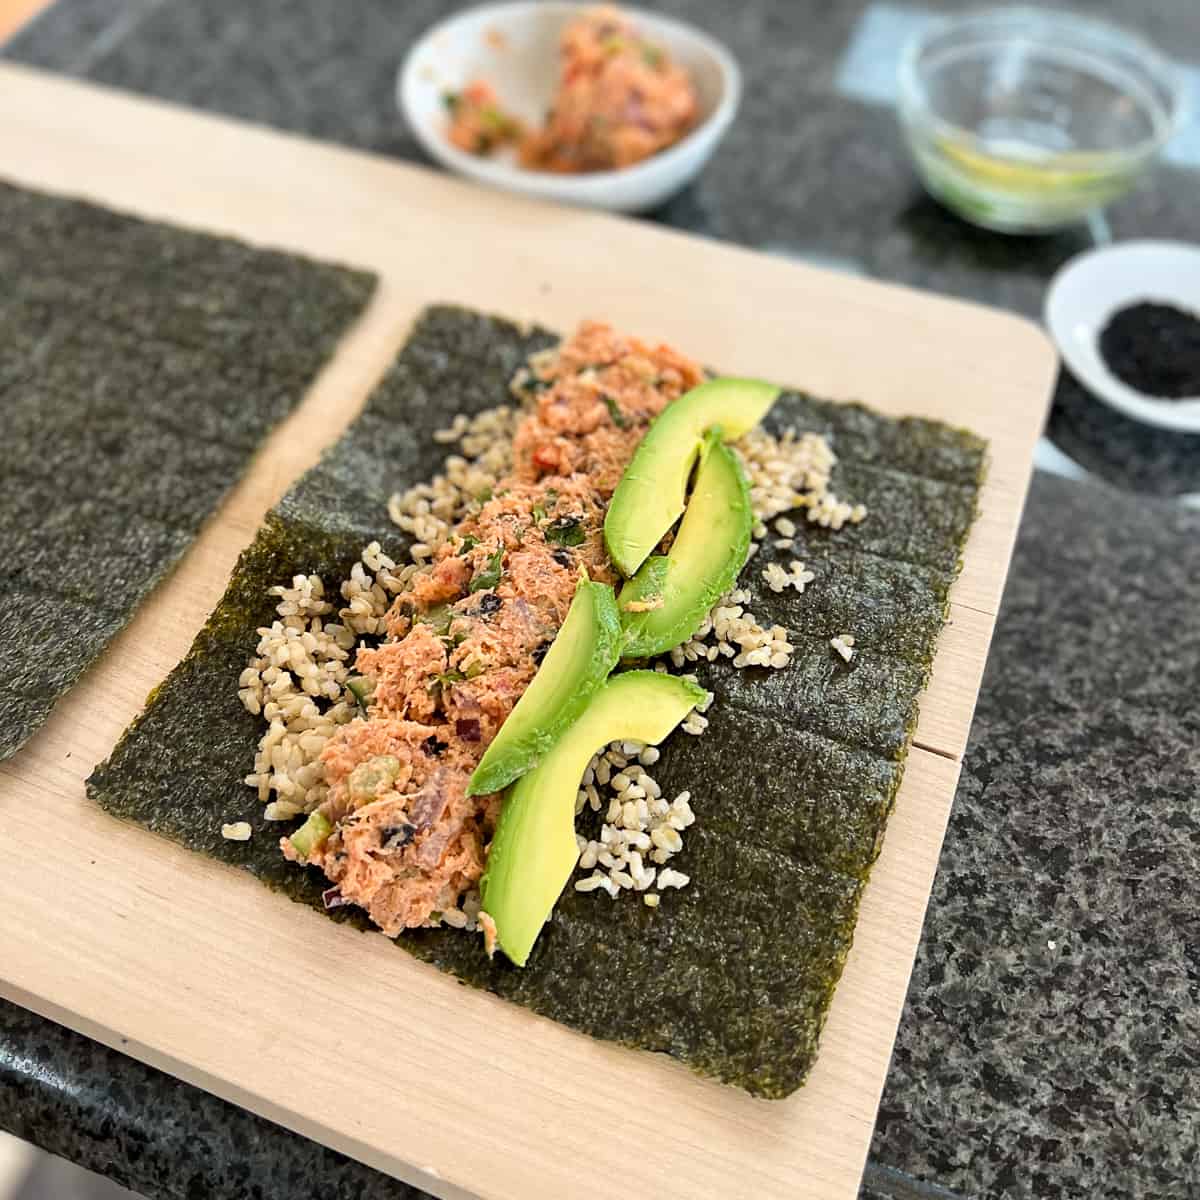 nori sheet with brown rice, vegan tuna salad, sliced avocado open on a wooden cutting board